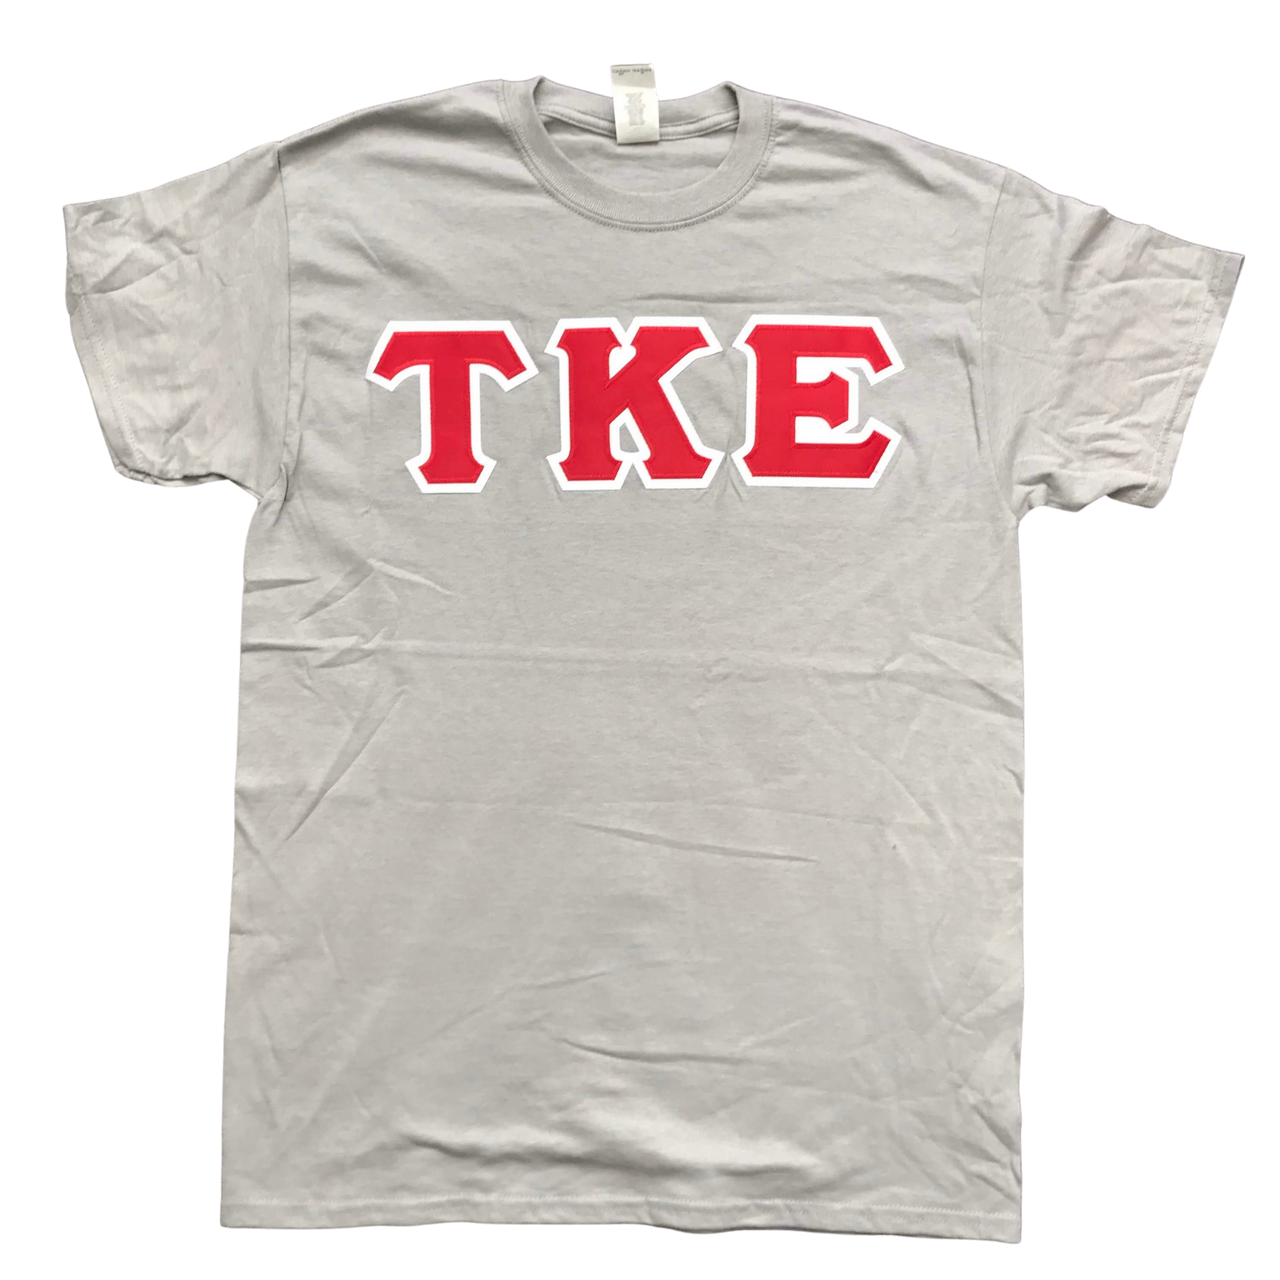 Tau Kappa Epsilon Stitched Letter T-Shirt | Gravel | Red with White Border